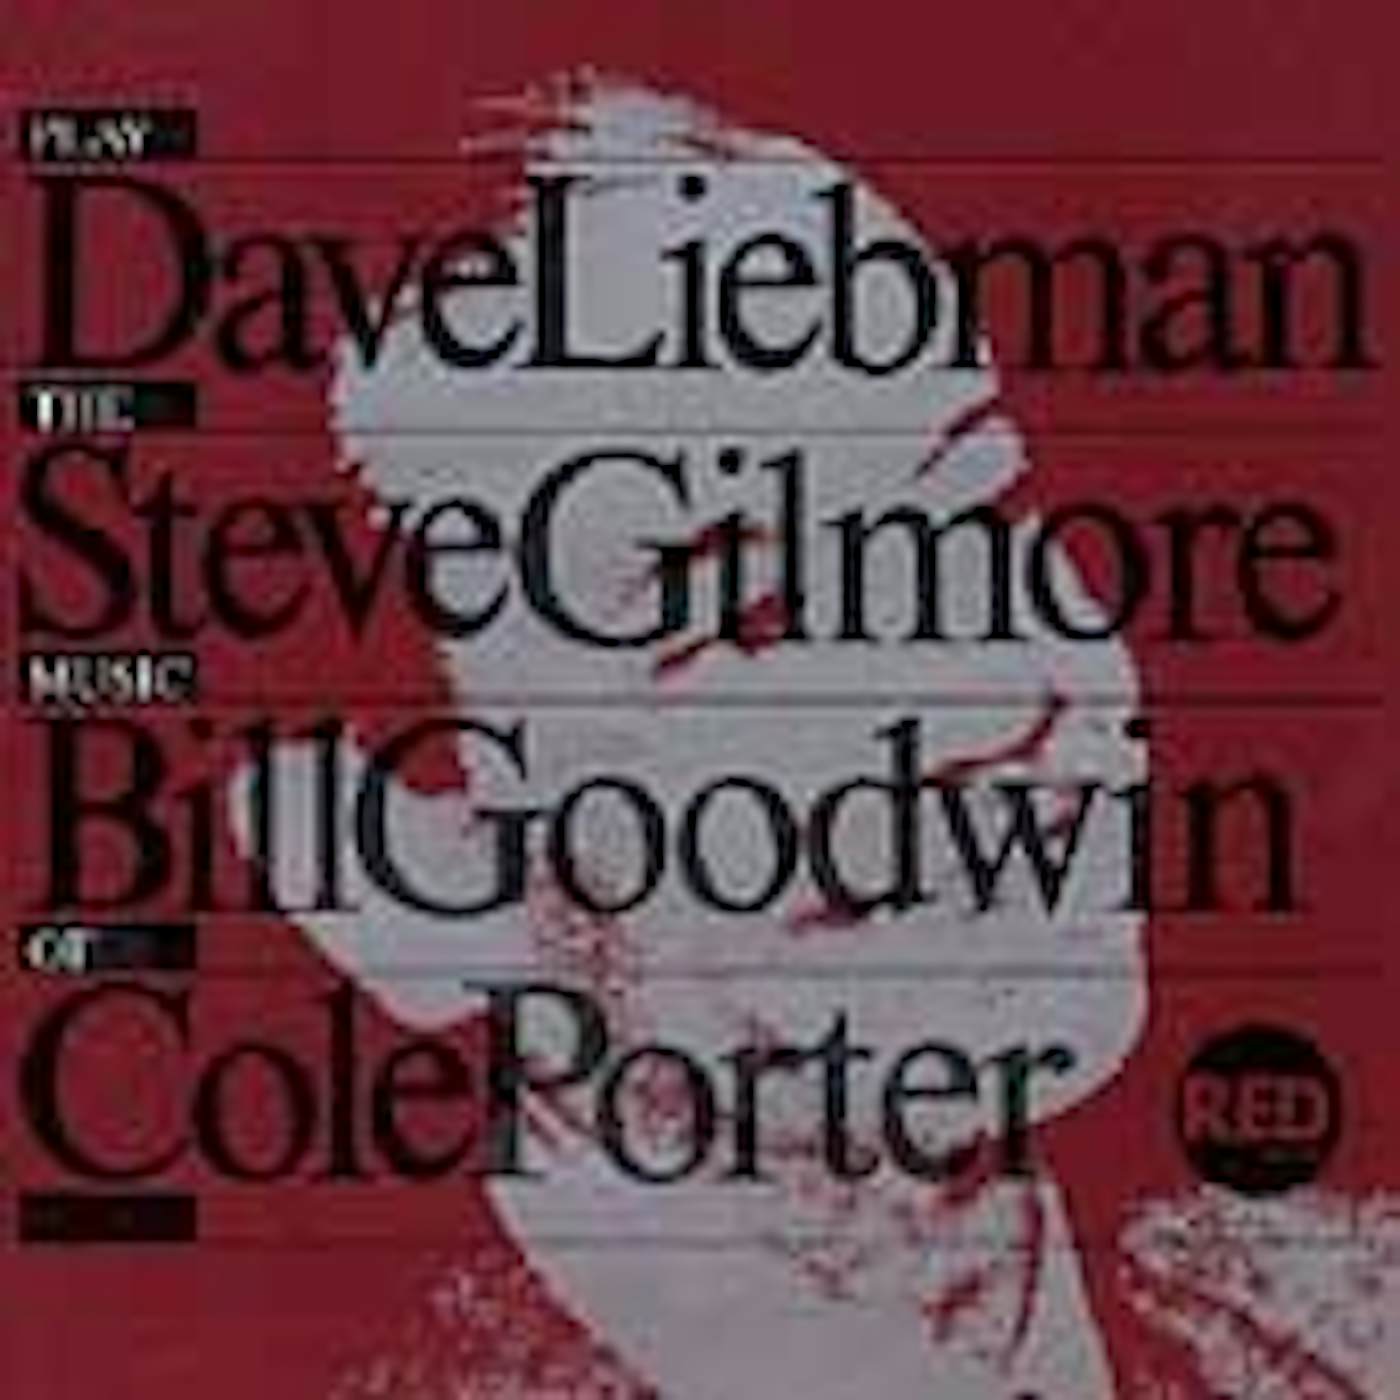 Dave Liebman PLAYS COLE PORTER CD